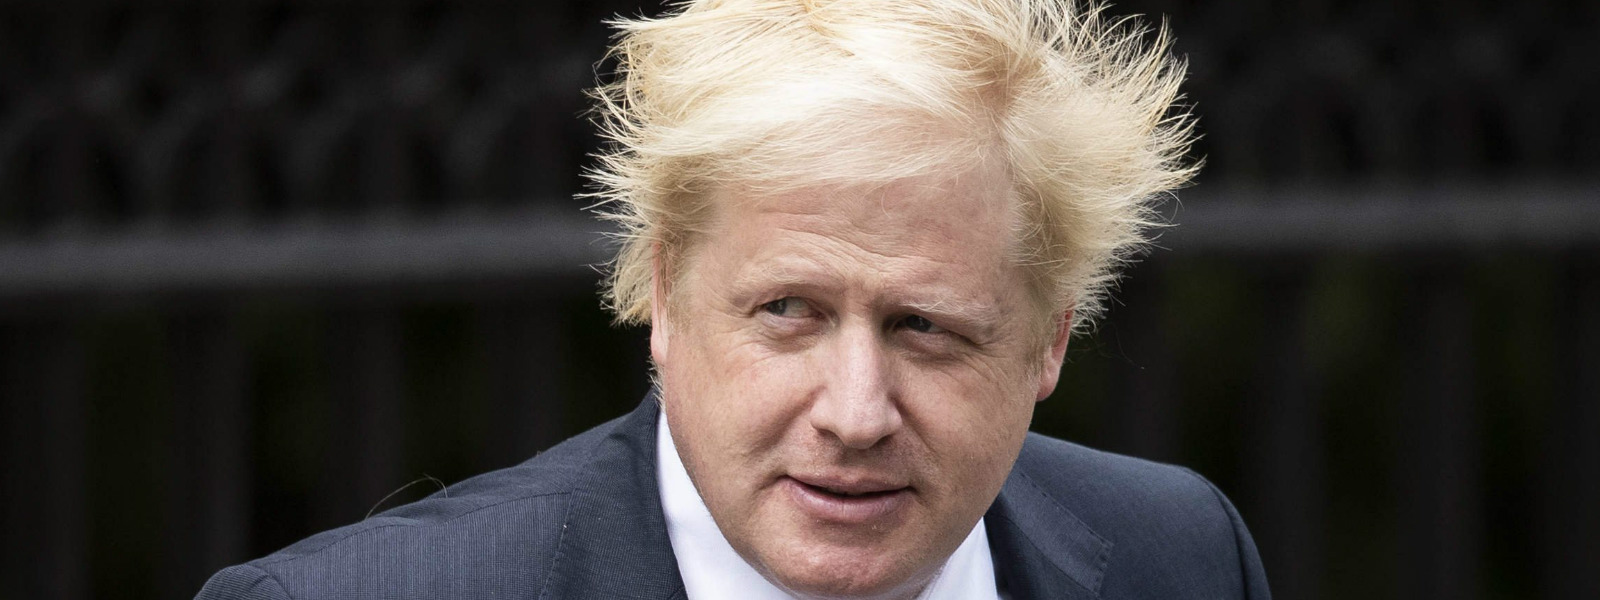 Britain’s new leader: Brexiteer Boris Johnson to be prime minister